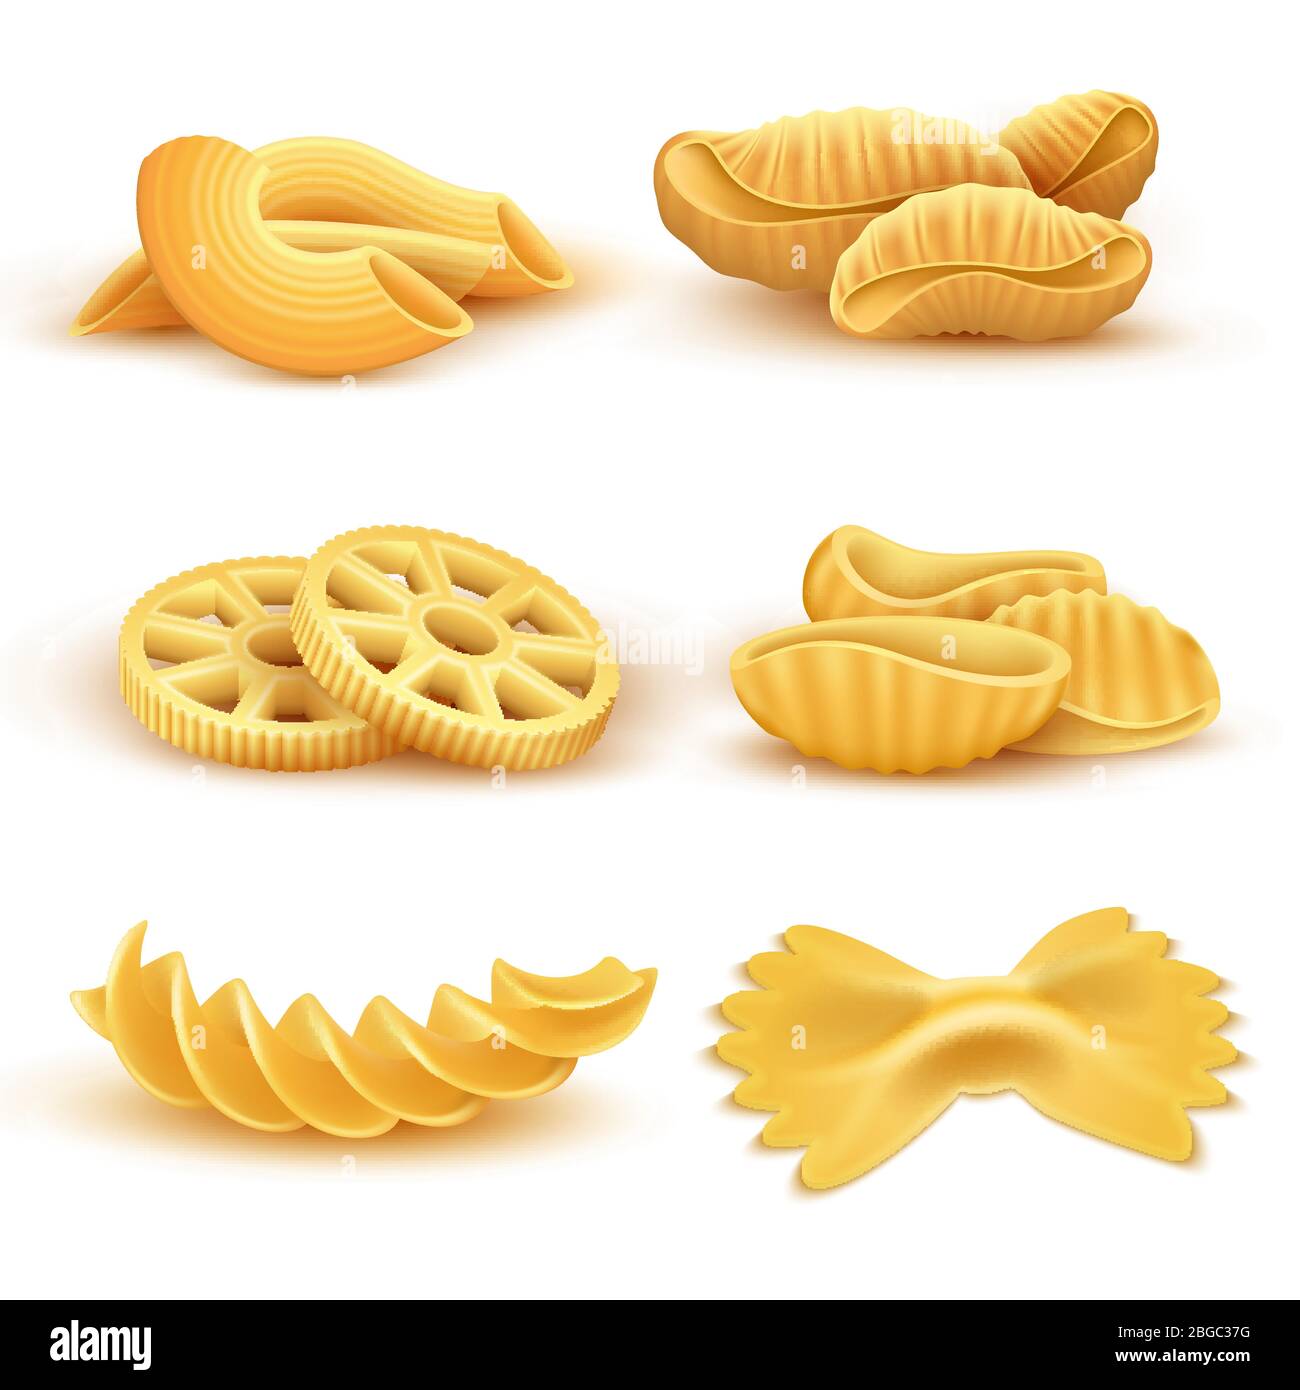 The art of Italian pasta making